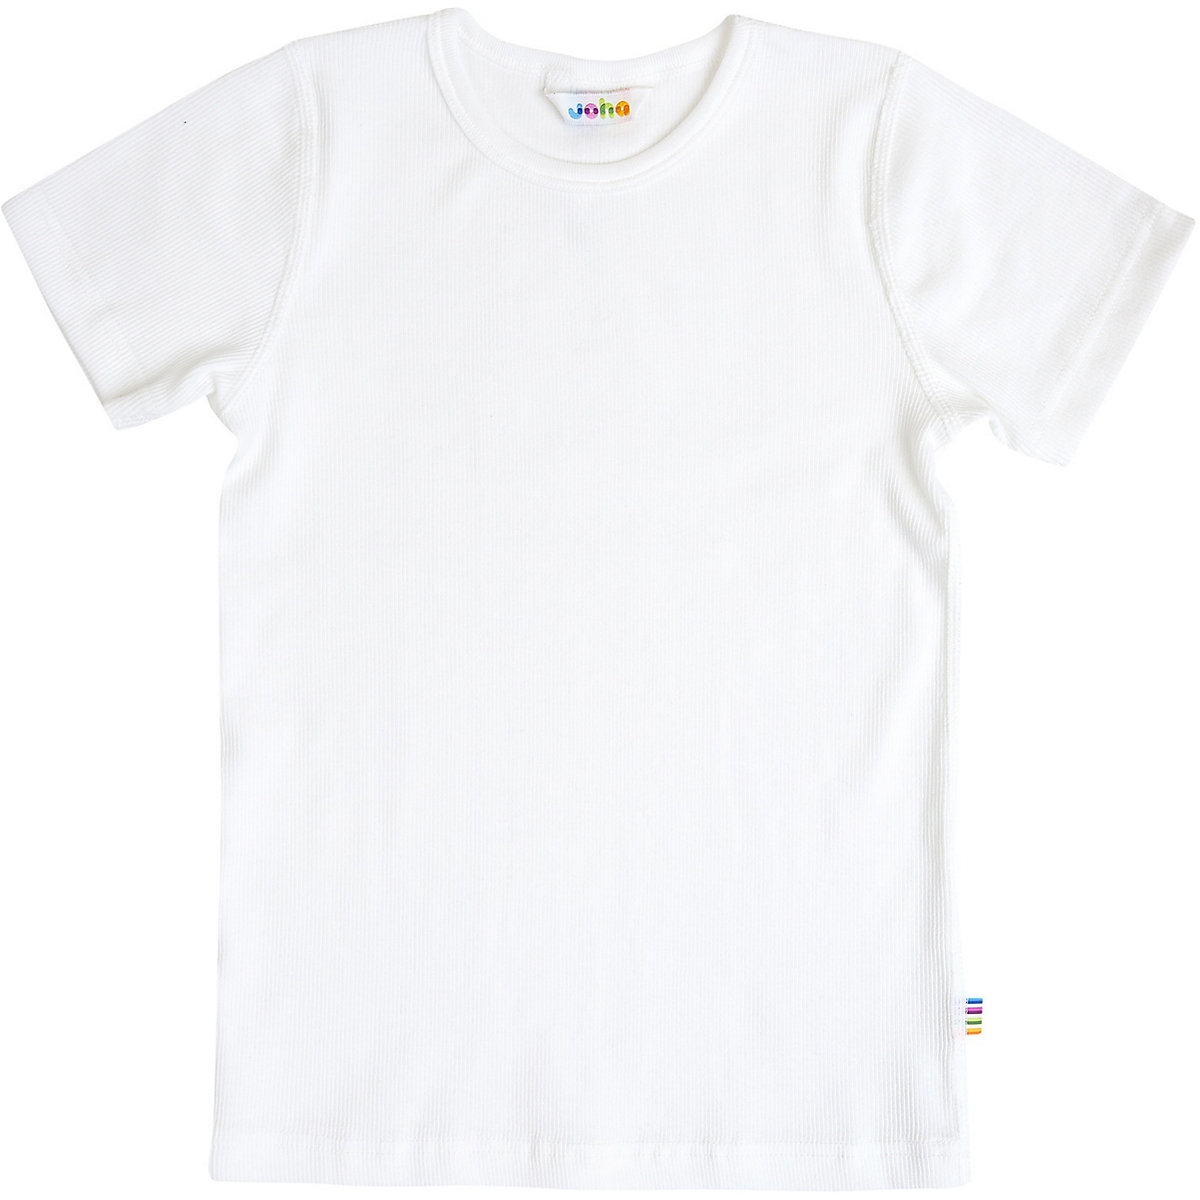 Joha Kinder T-Shirt White weiß